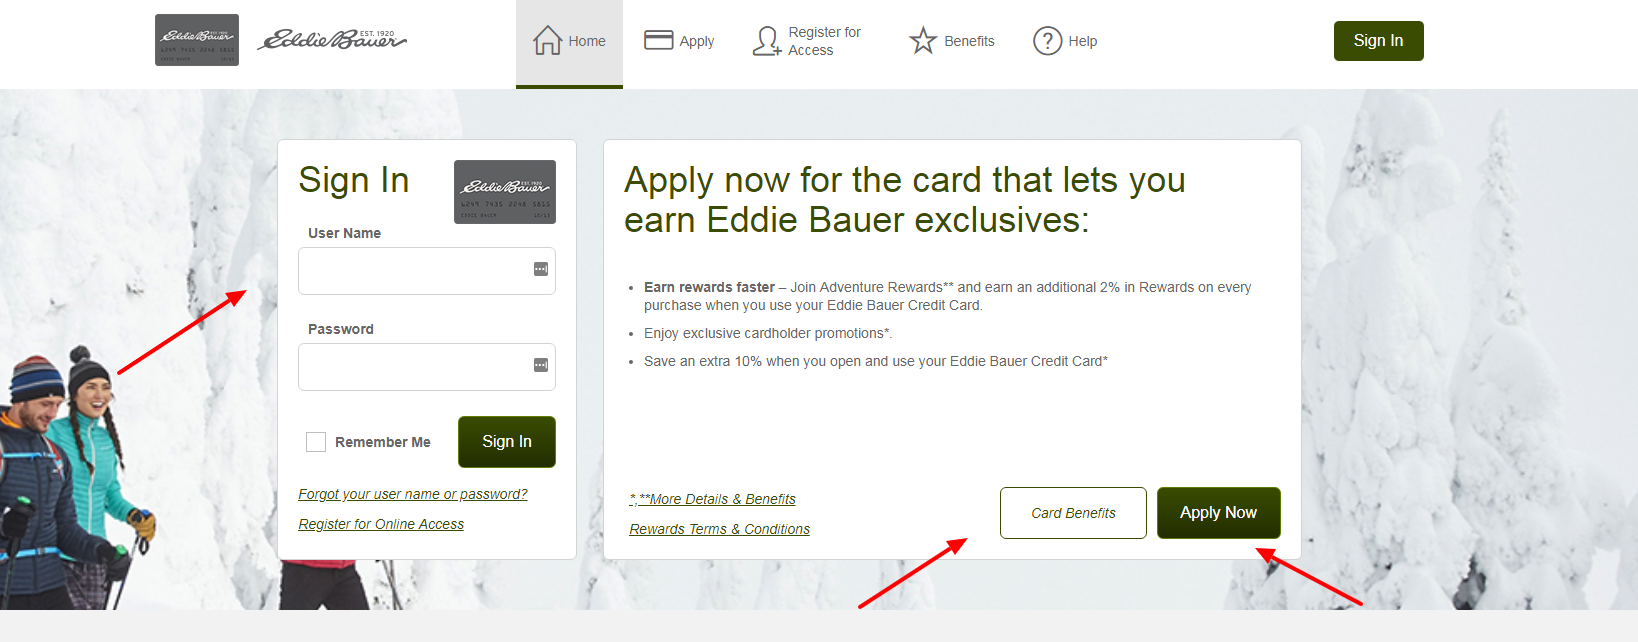 log in to eddie bauer credit card account